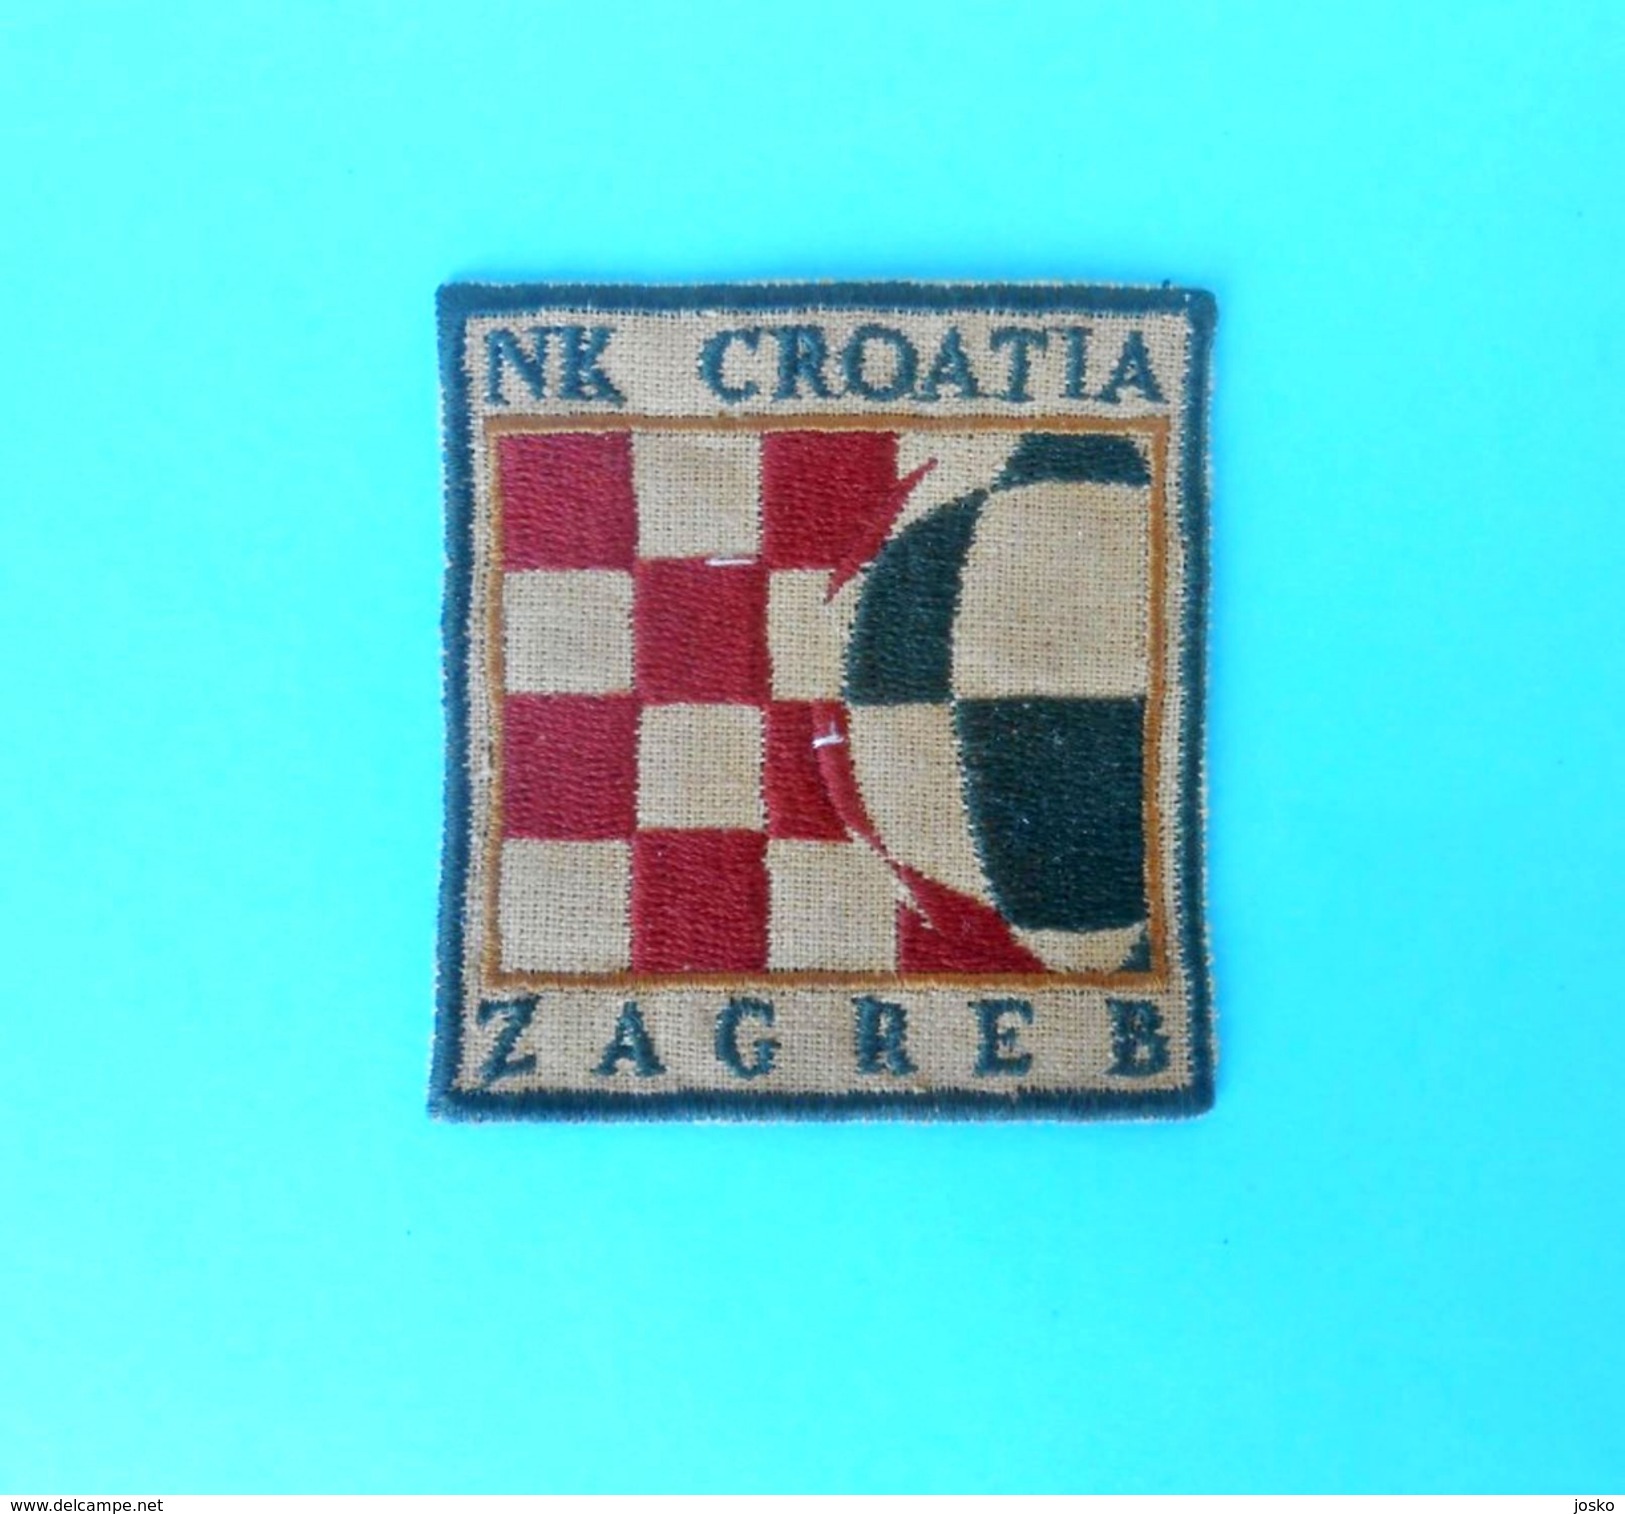 NK CROATIA ZAGREB ( Now GNK DINAMO ) - Croatia Football Club Official Vintage Patch * Soccer Fussball Calcio Croatie - Bekleidung, Souvenirs Und Sonstige